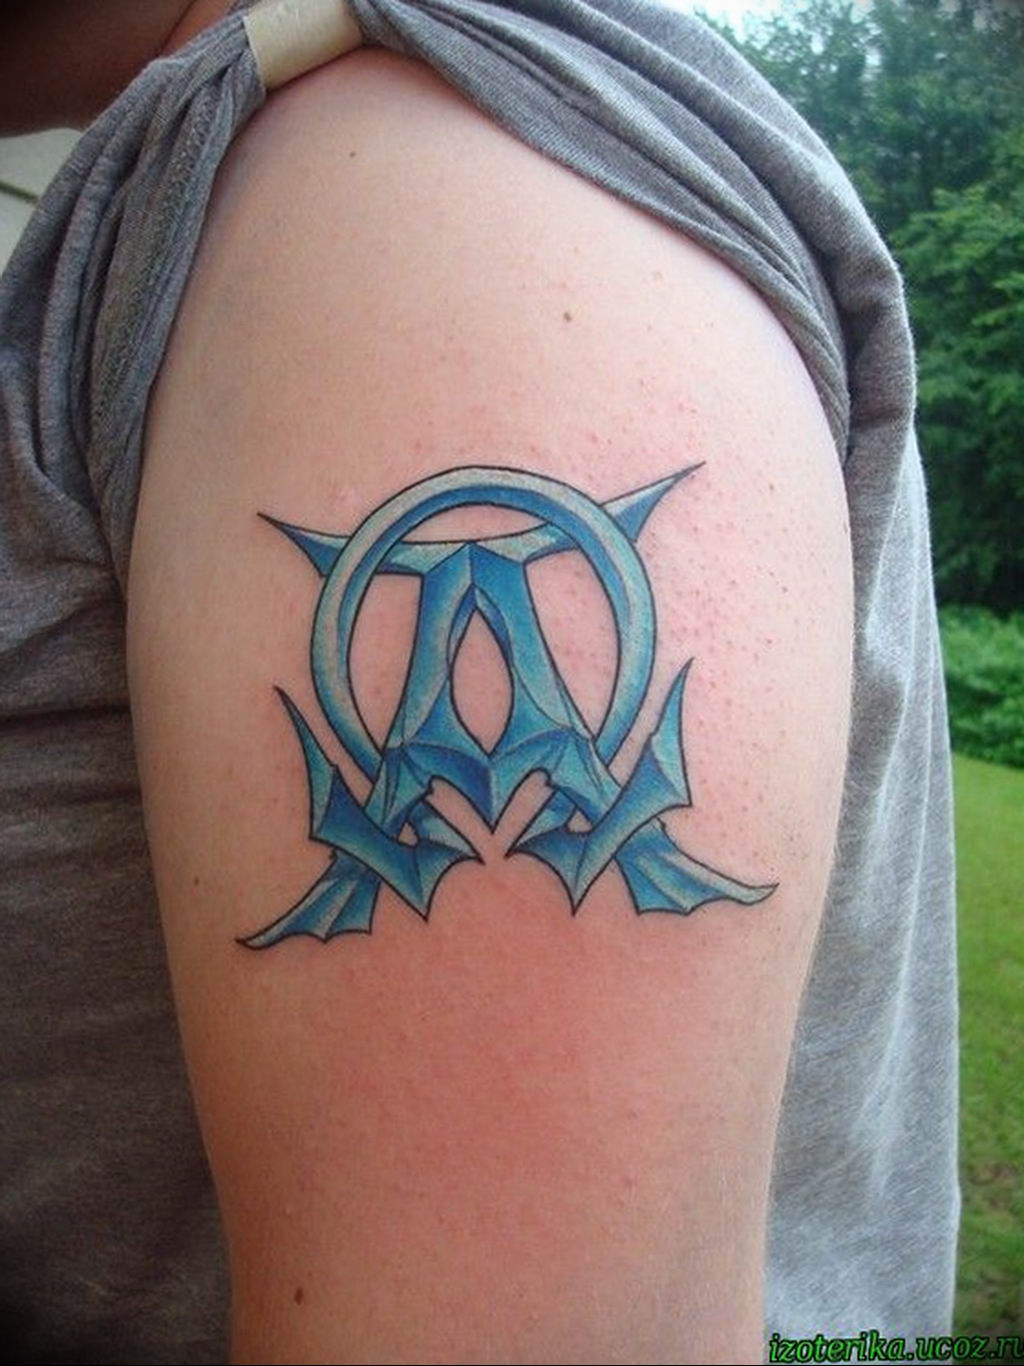 Alpha female symbol tattoo